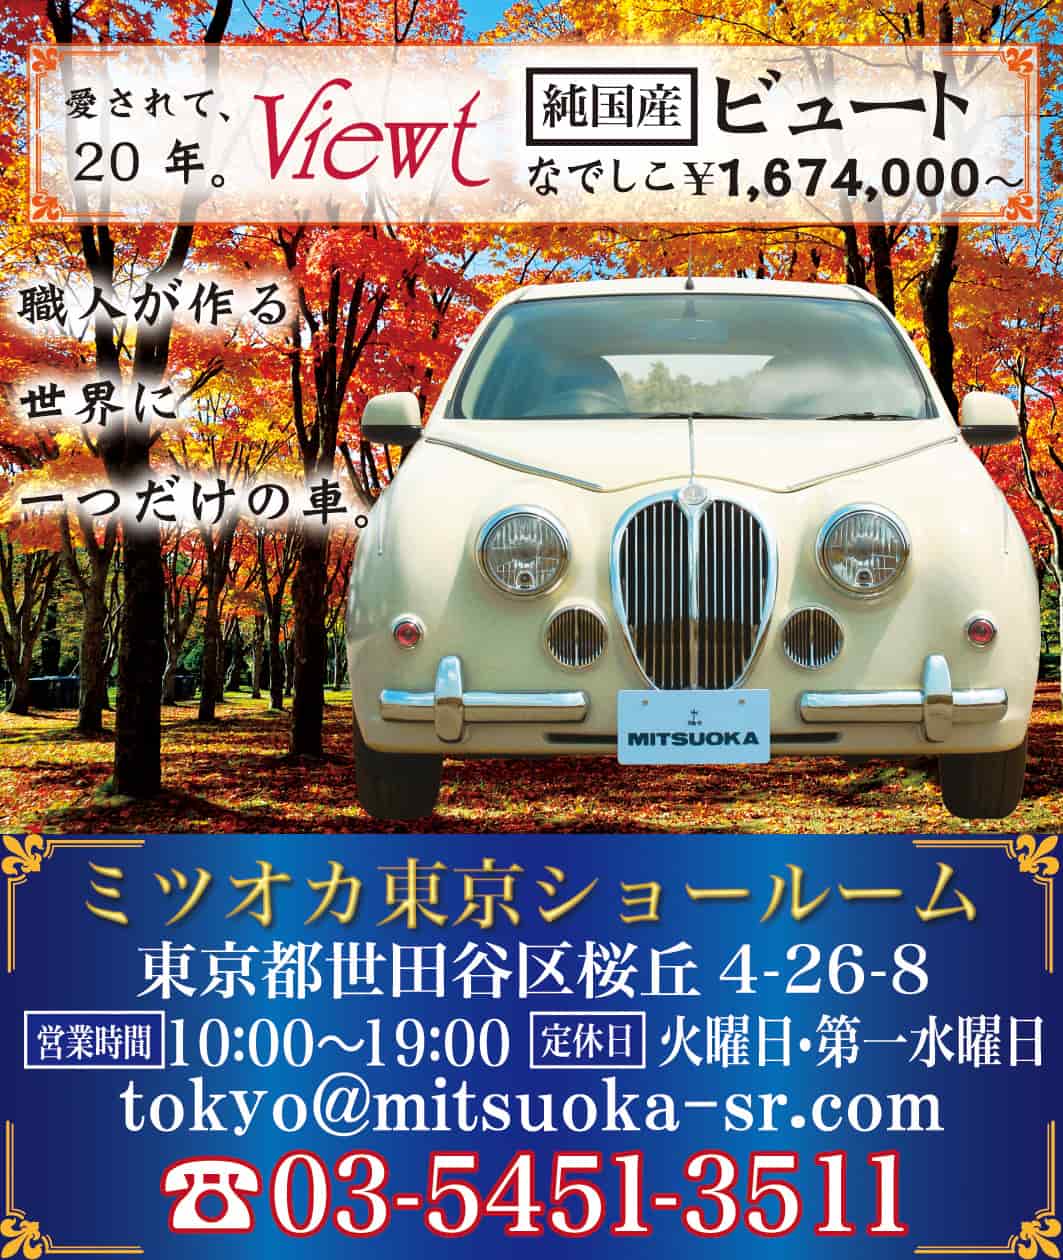 Advertising Design for Mitsuoka Motor